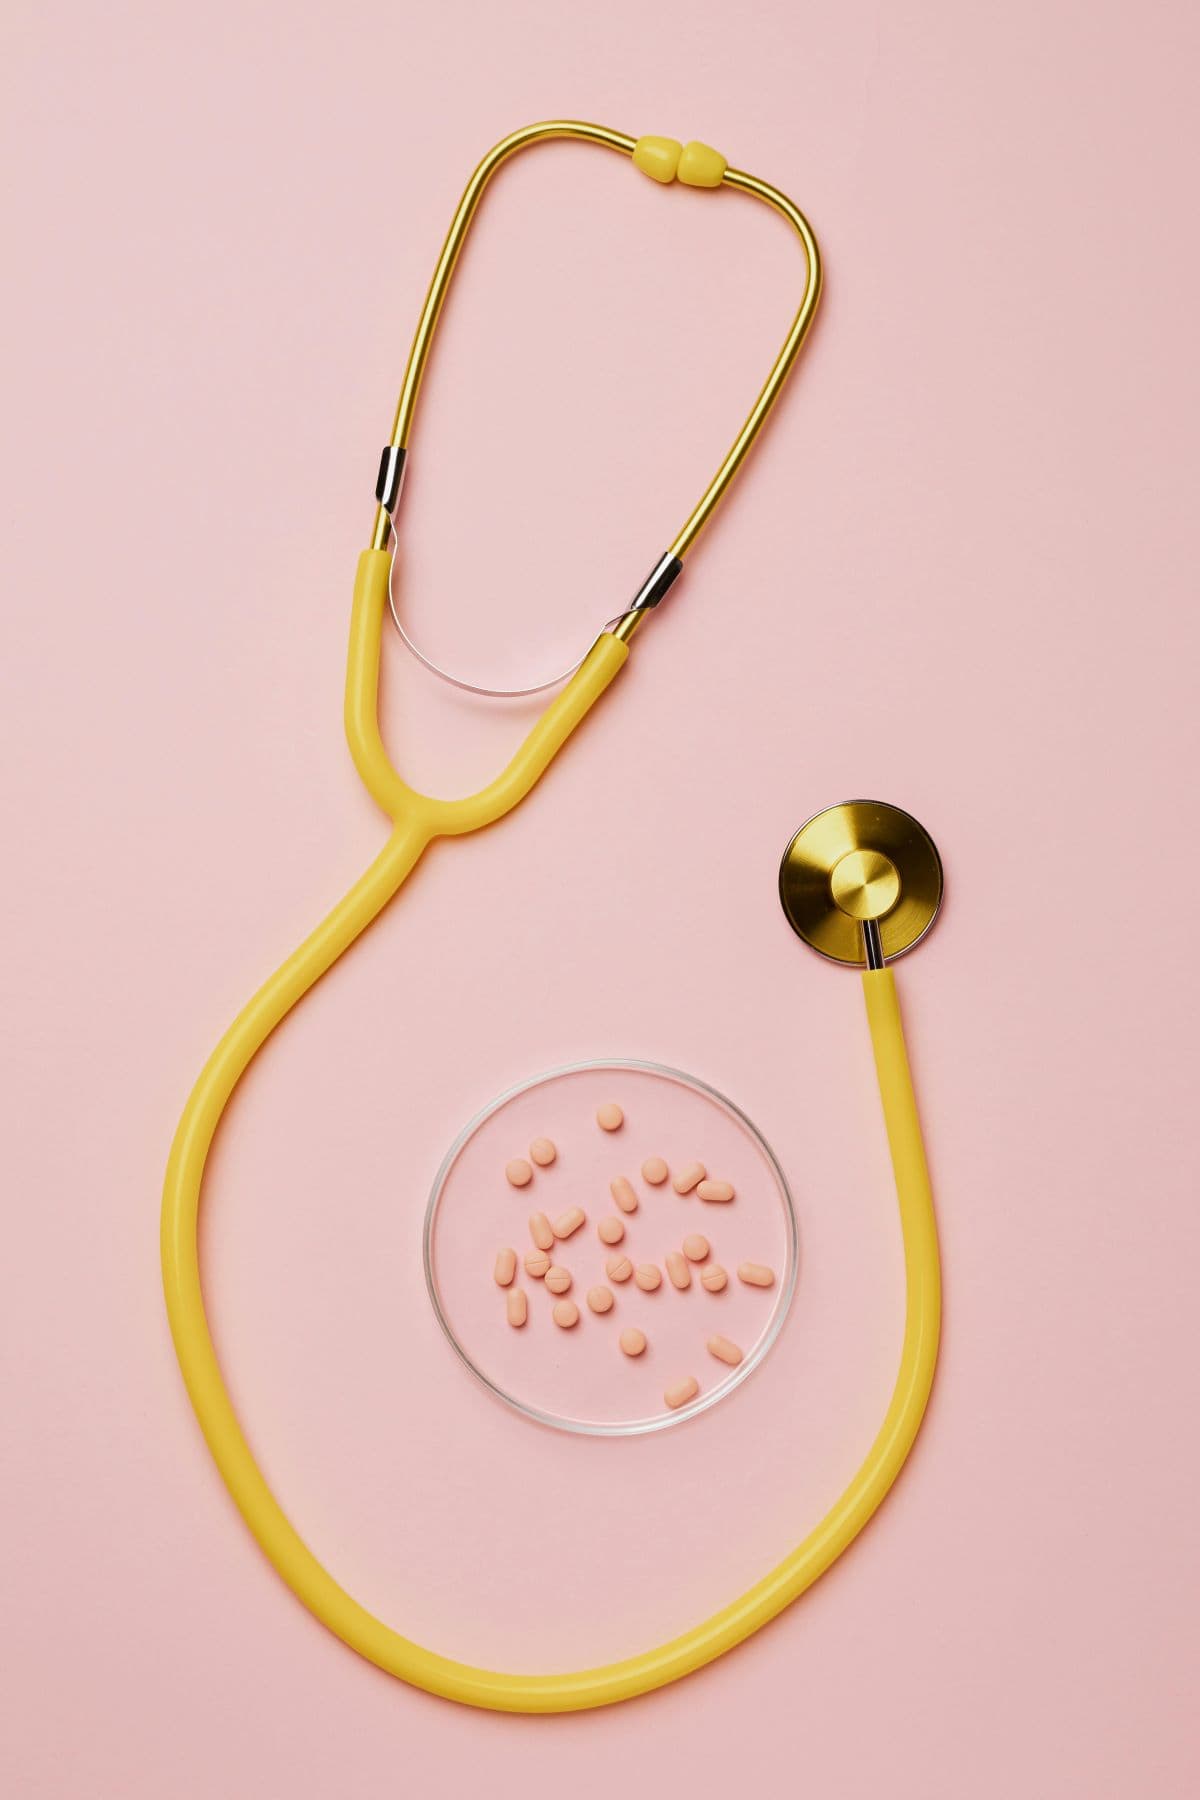 stethoscope and medication